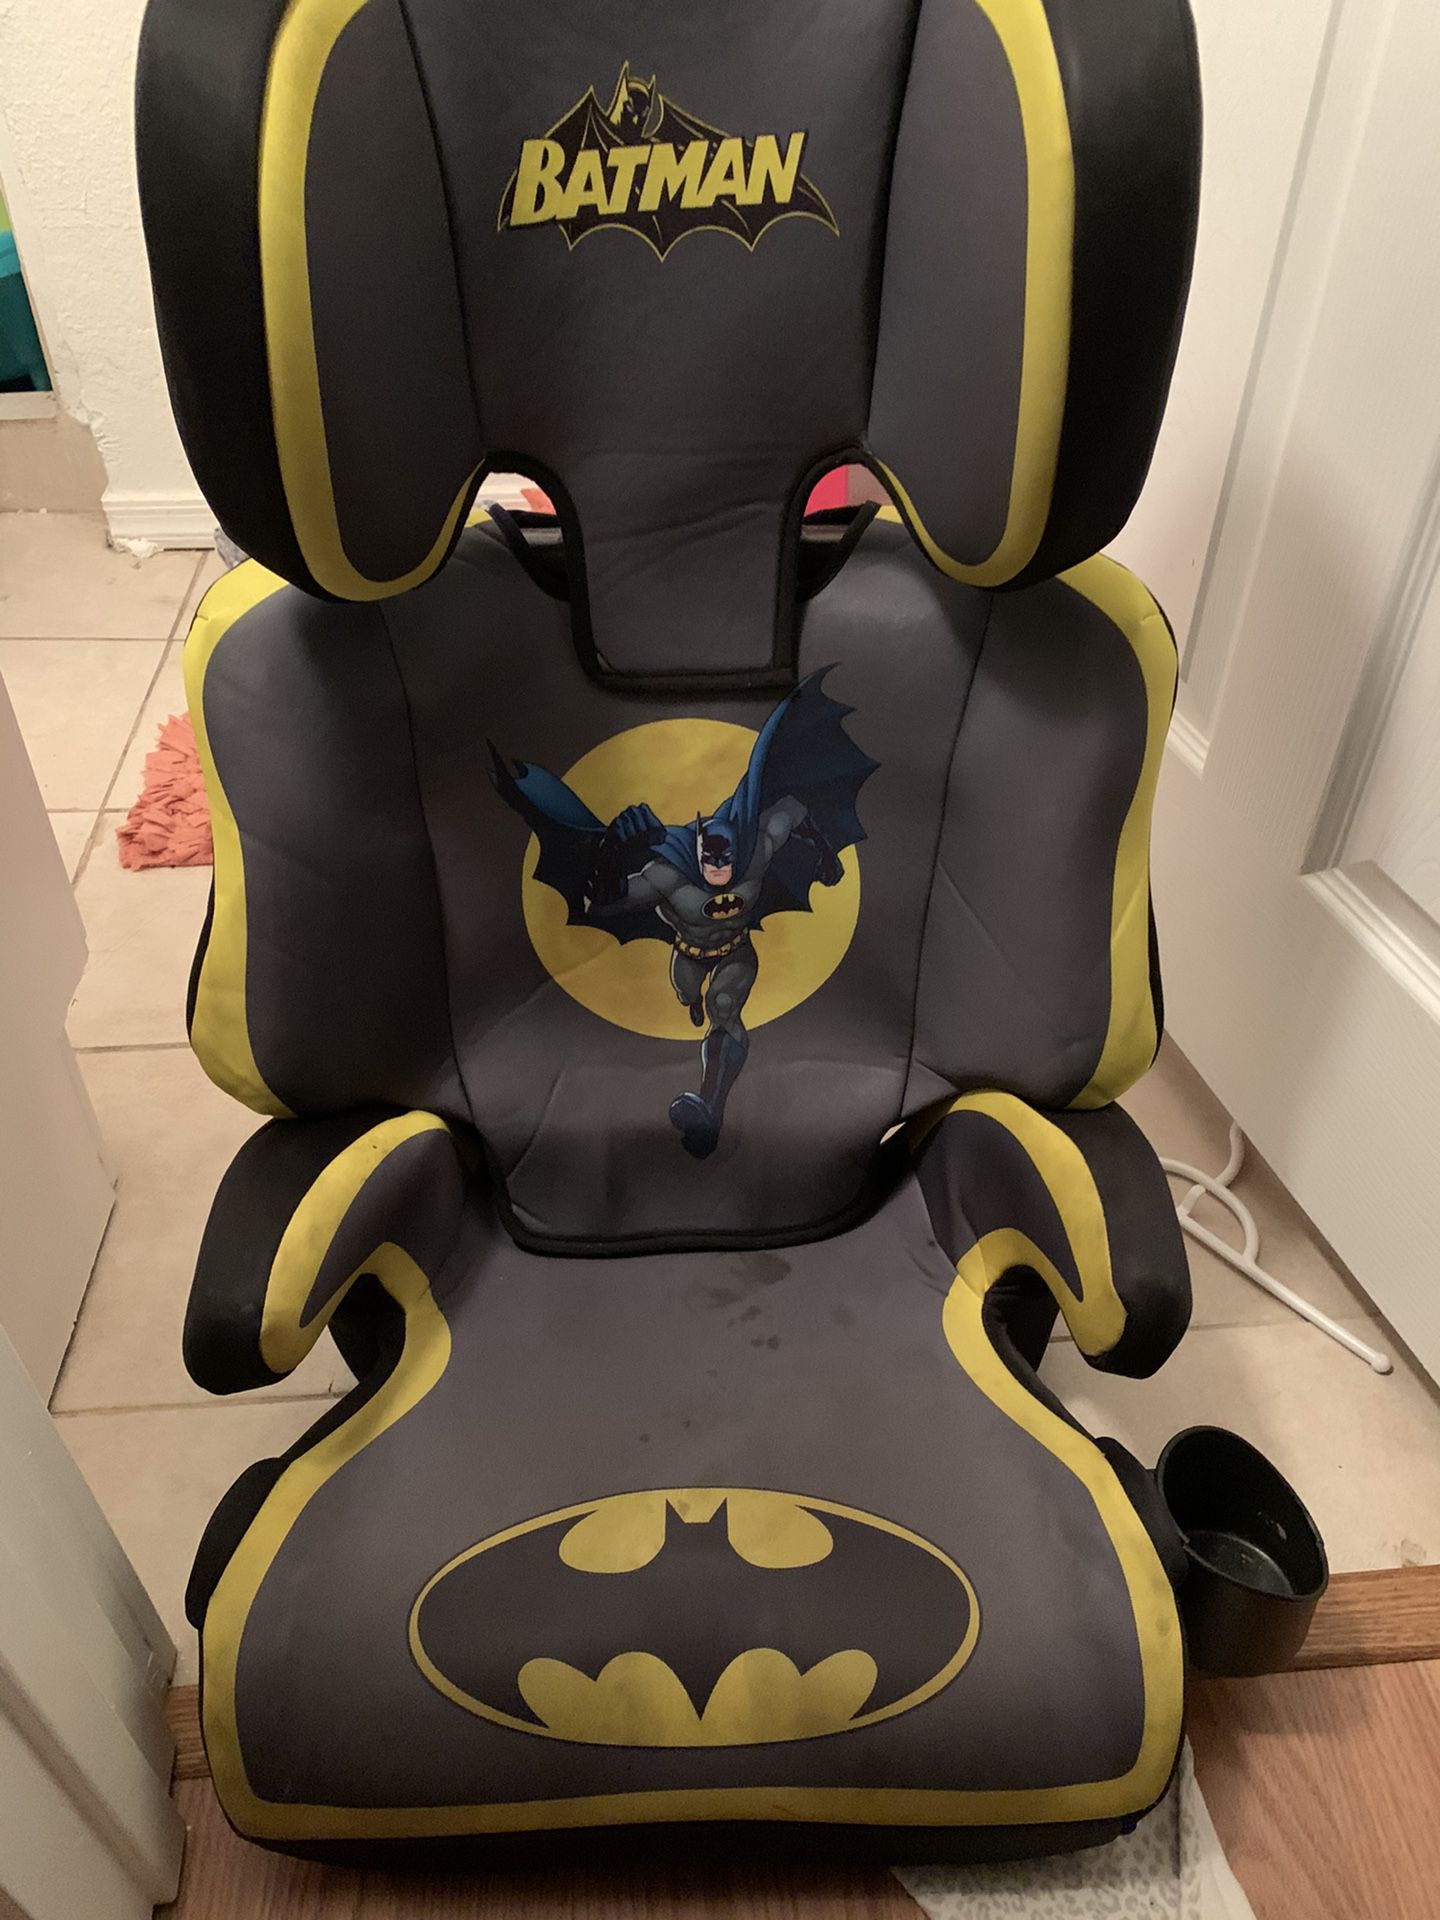 Batman booster seat